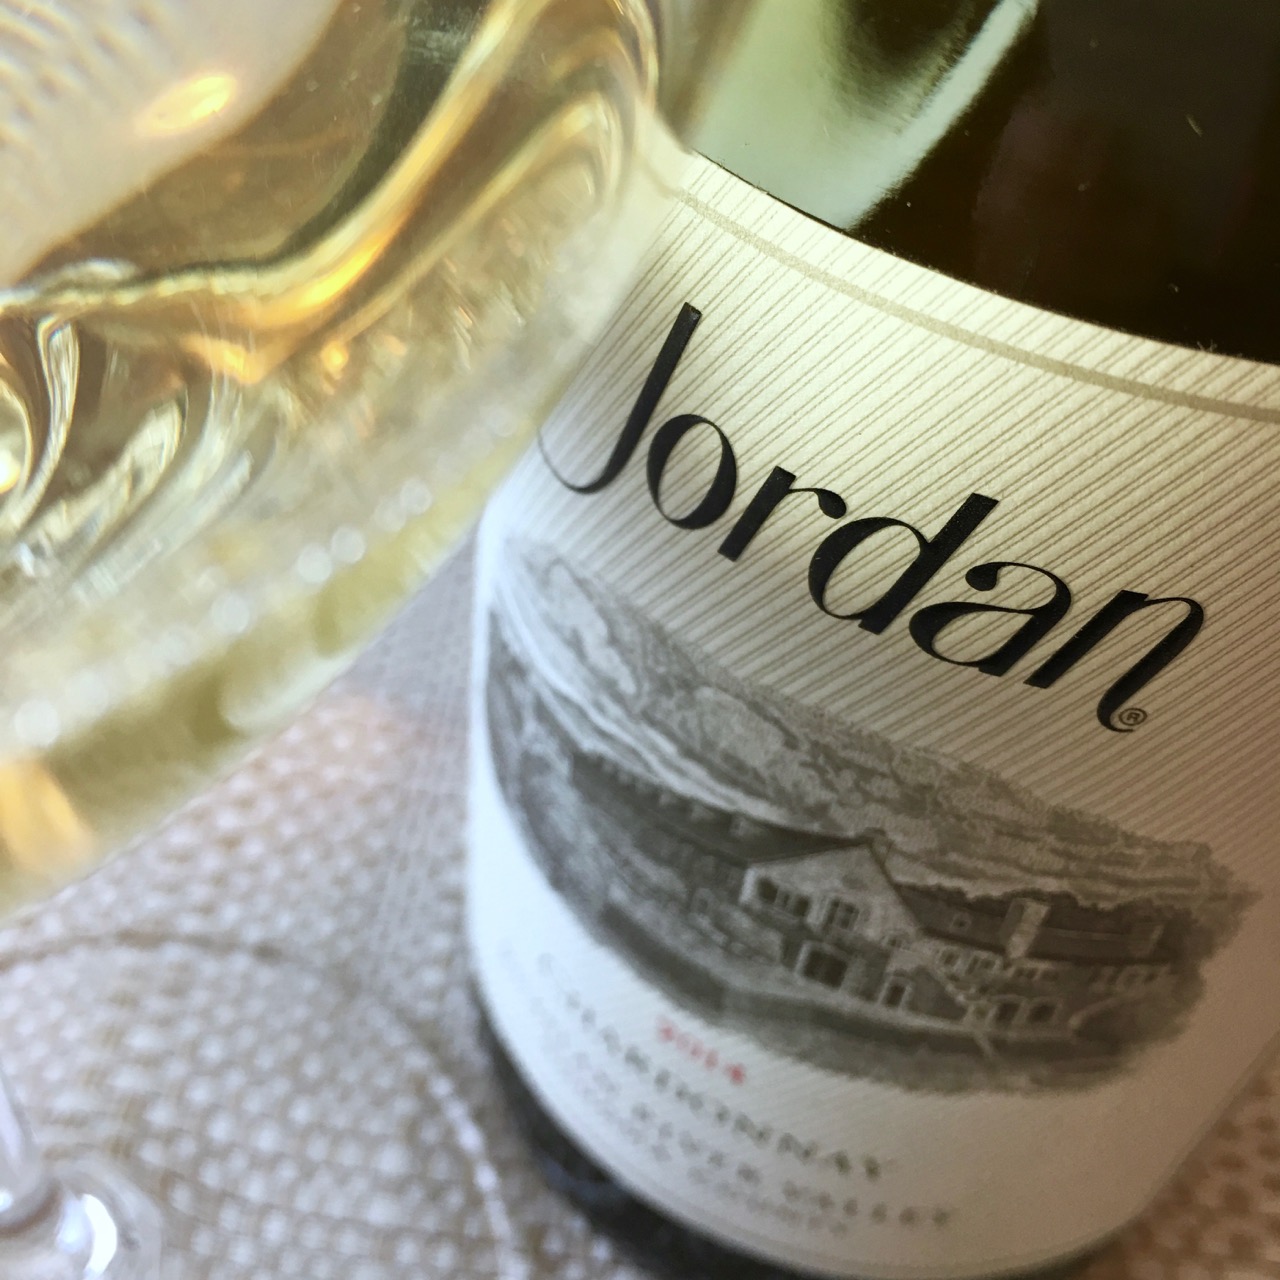 2014 Jordan Vineyard and Winery Chardonnay Russian River Valley, Sonoma County